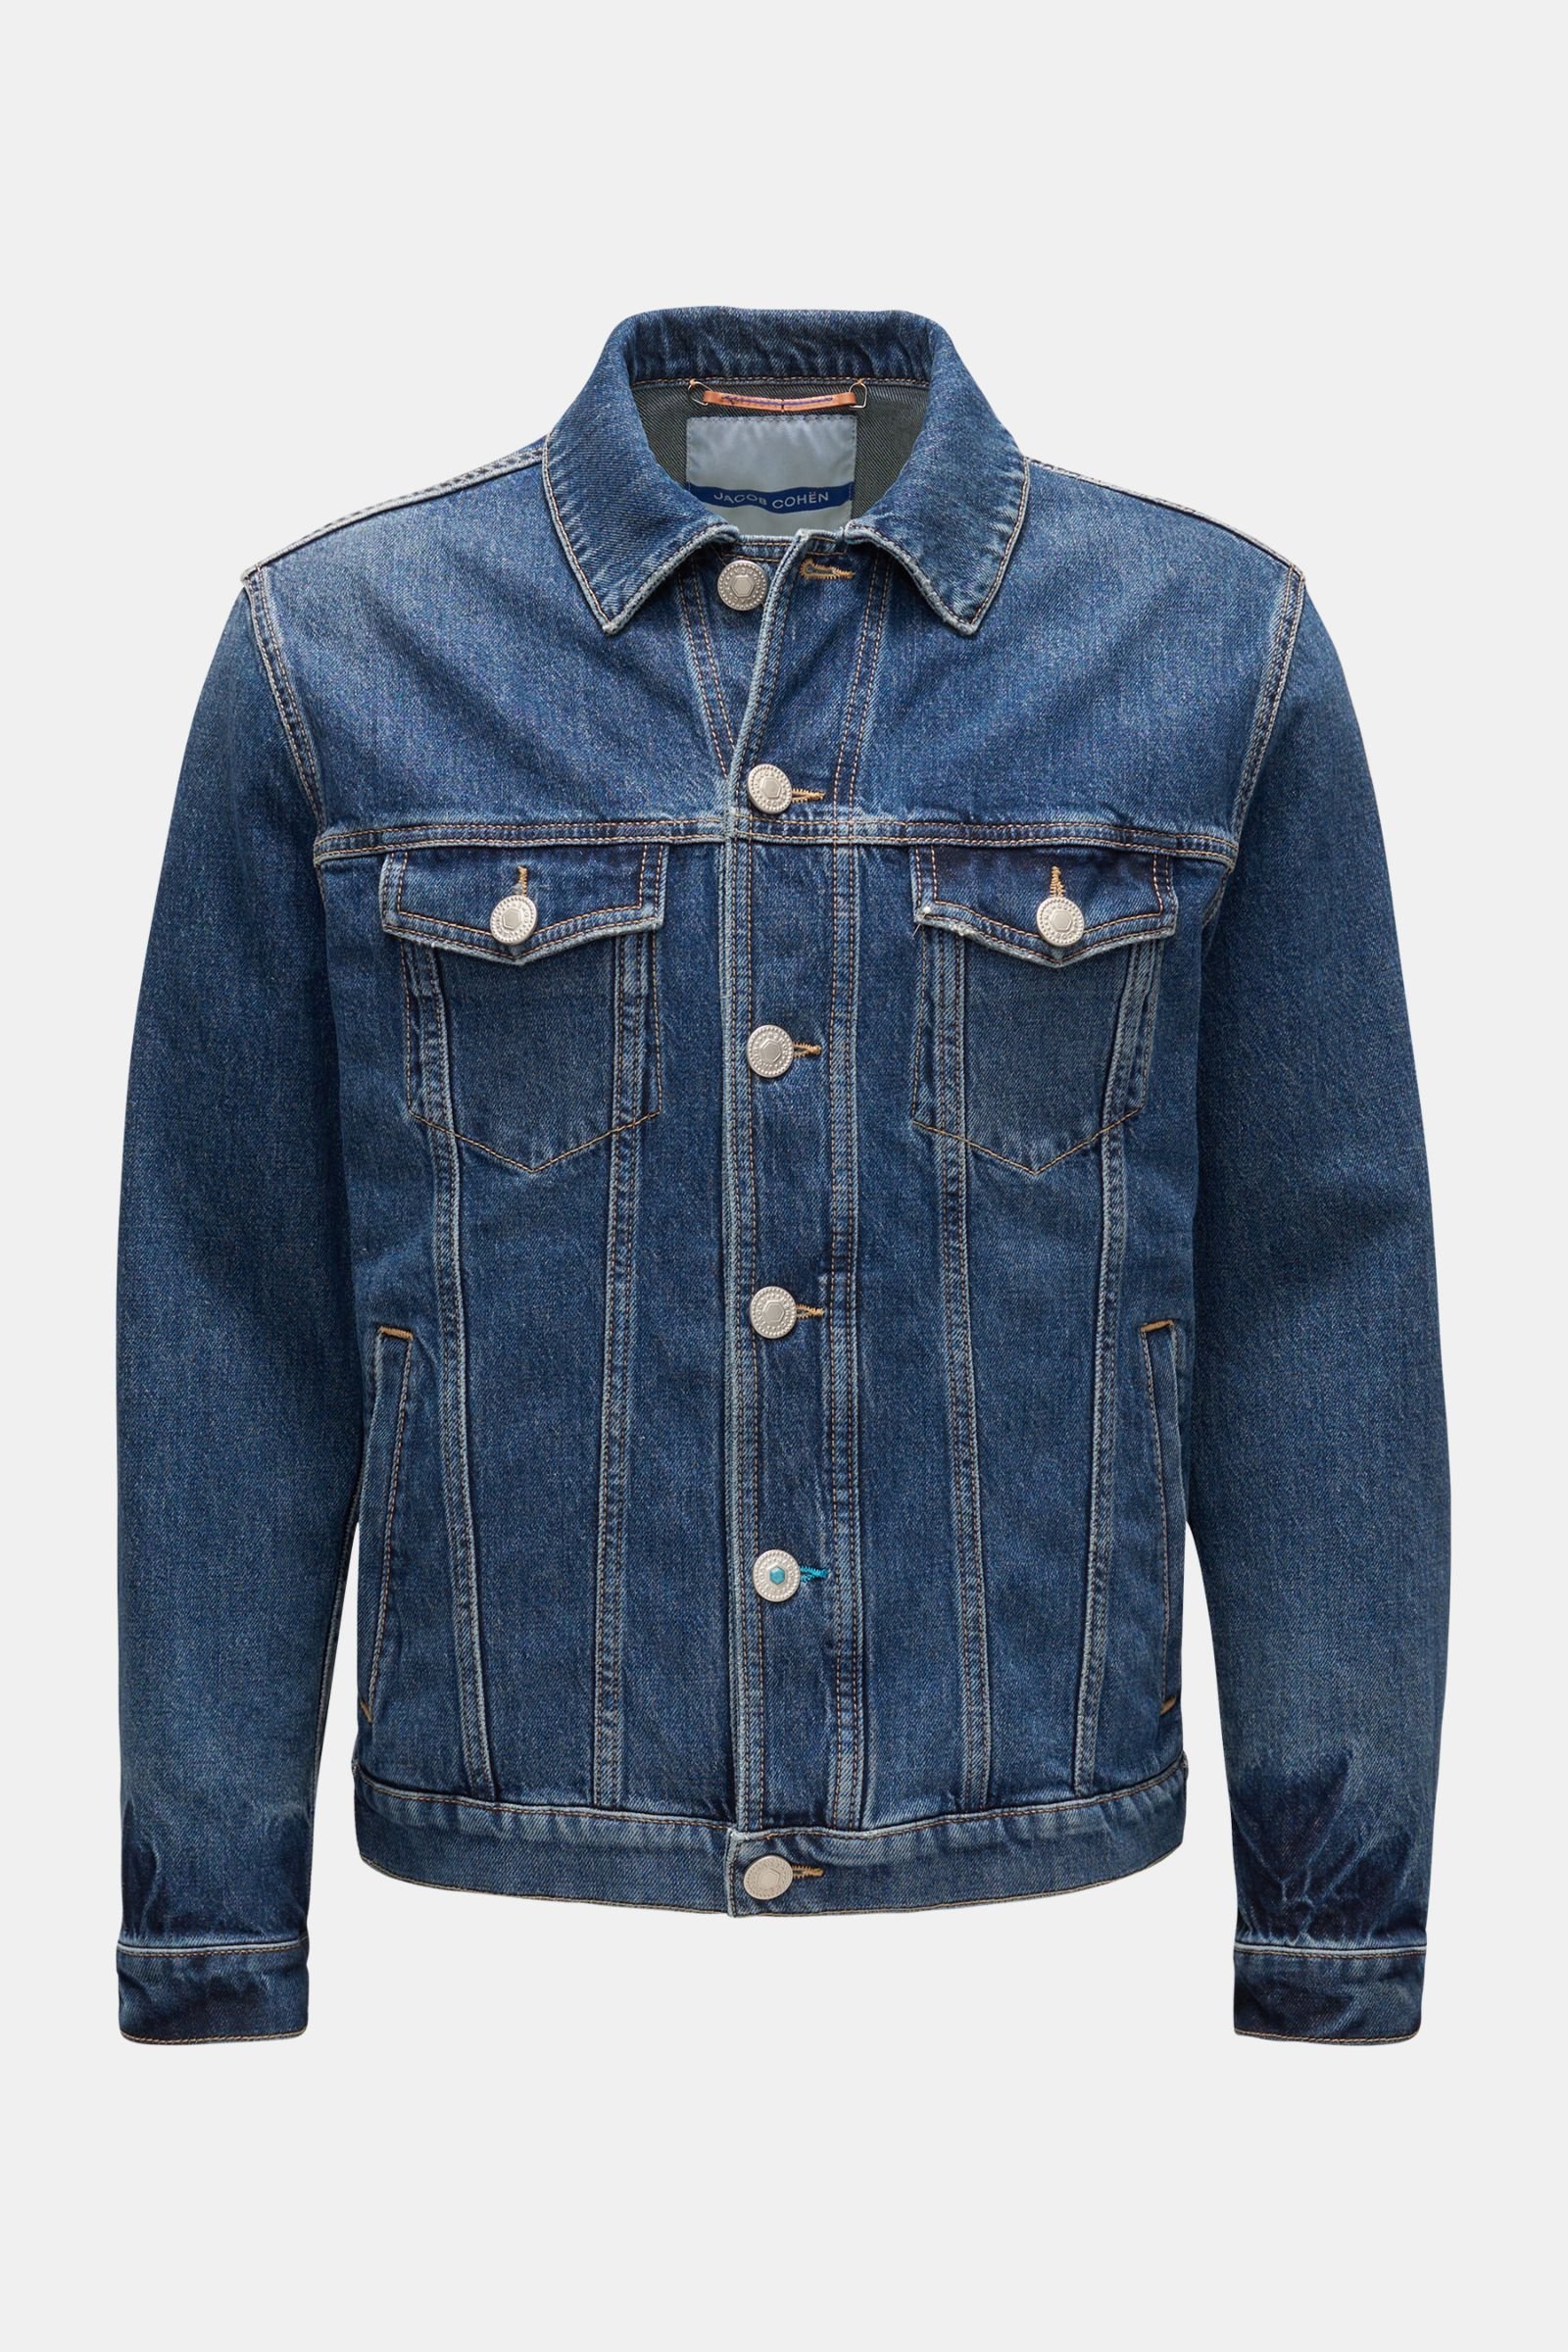 Denim jacket 'Trucker' grey-blue